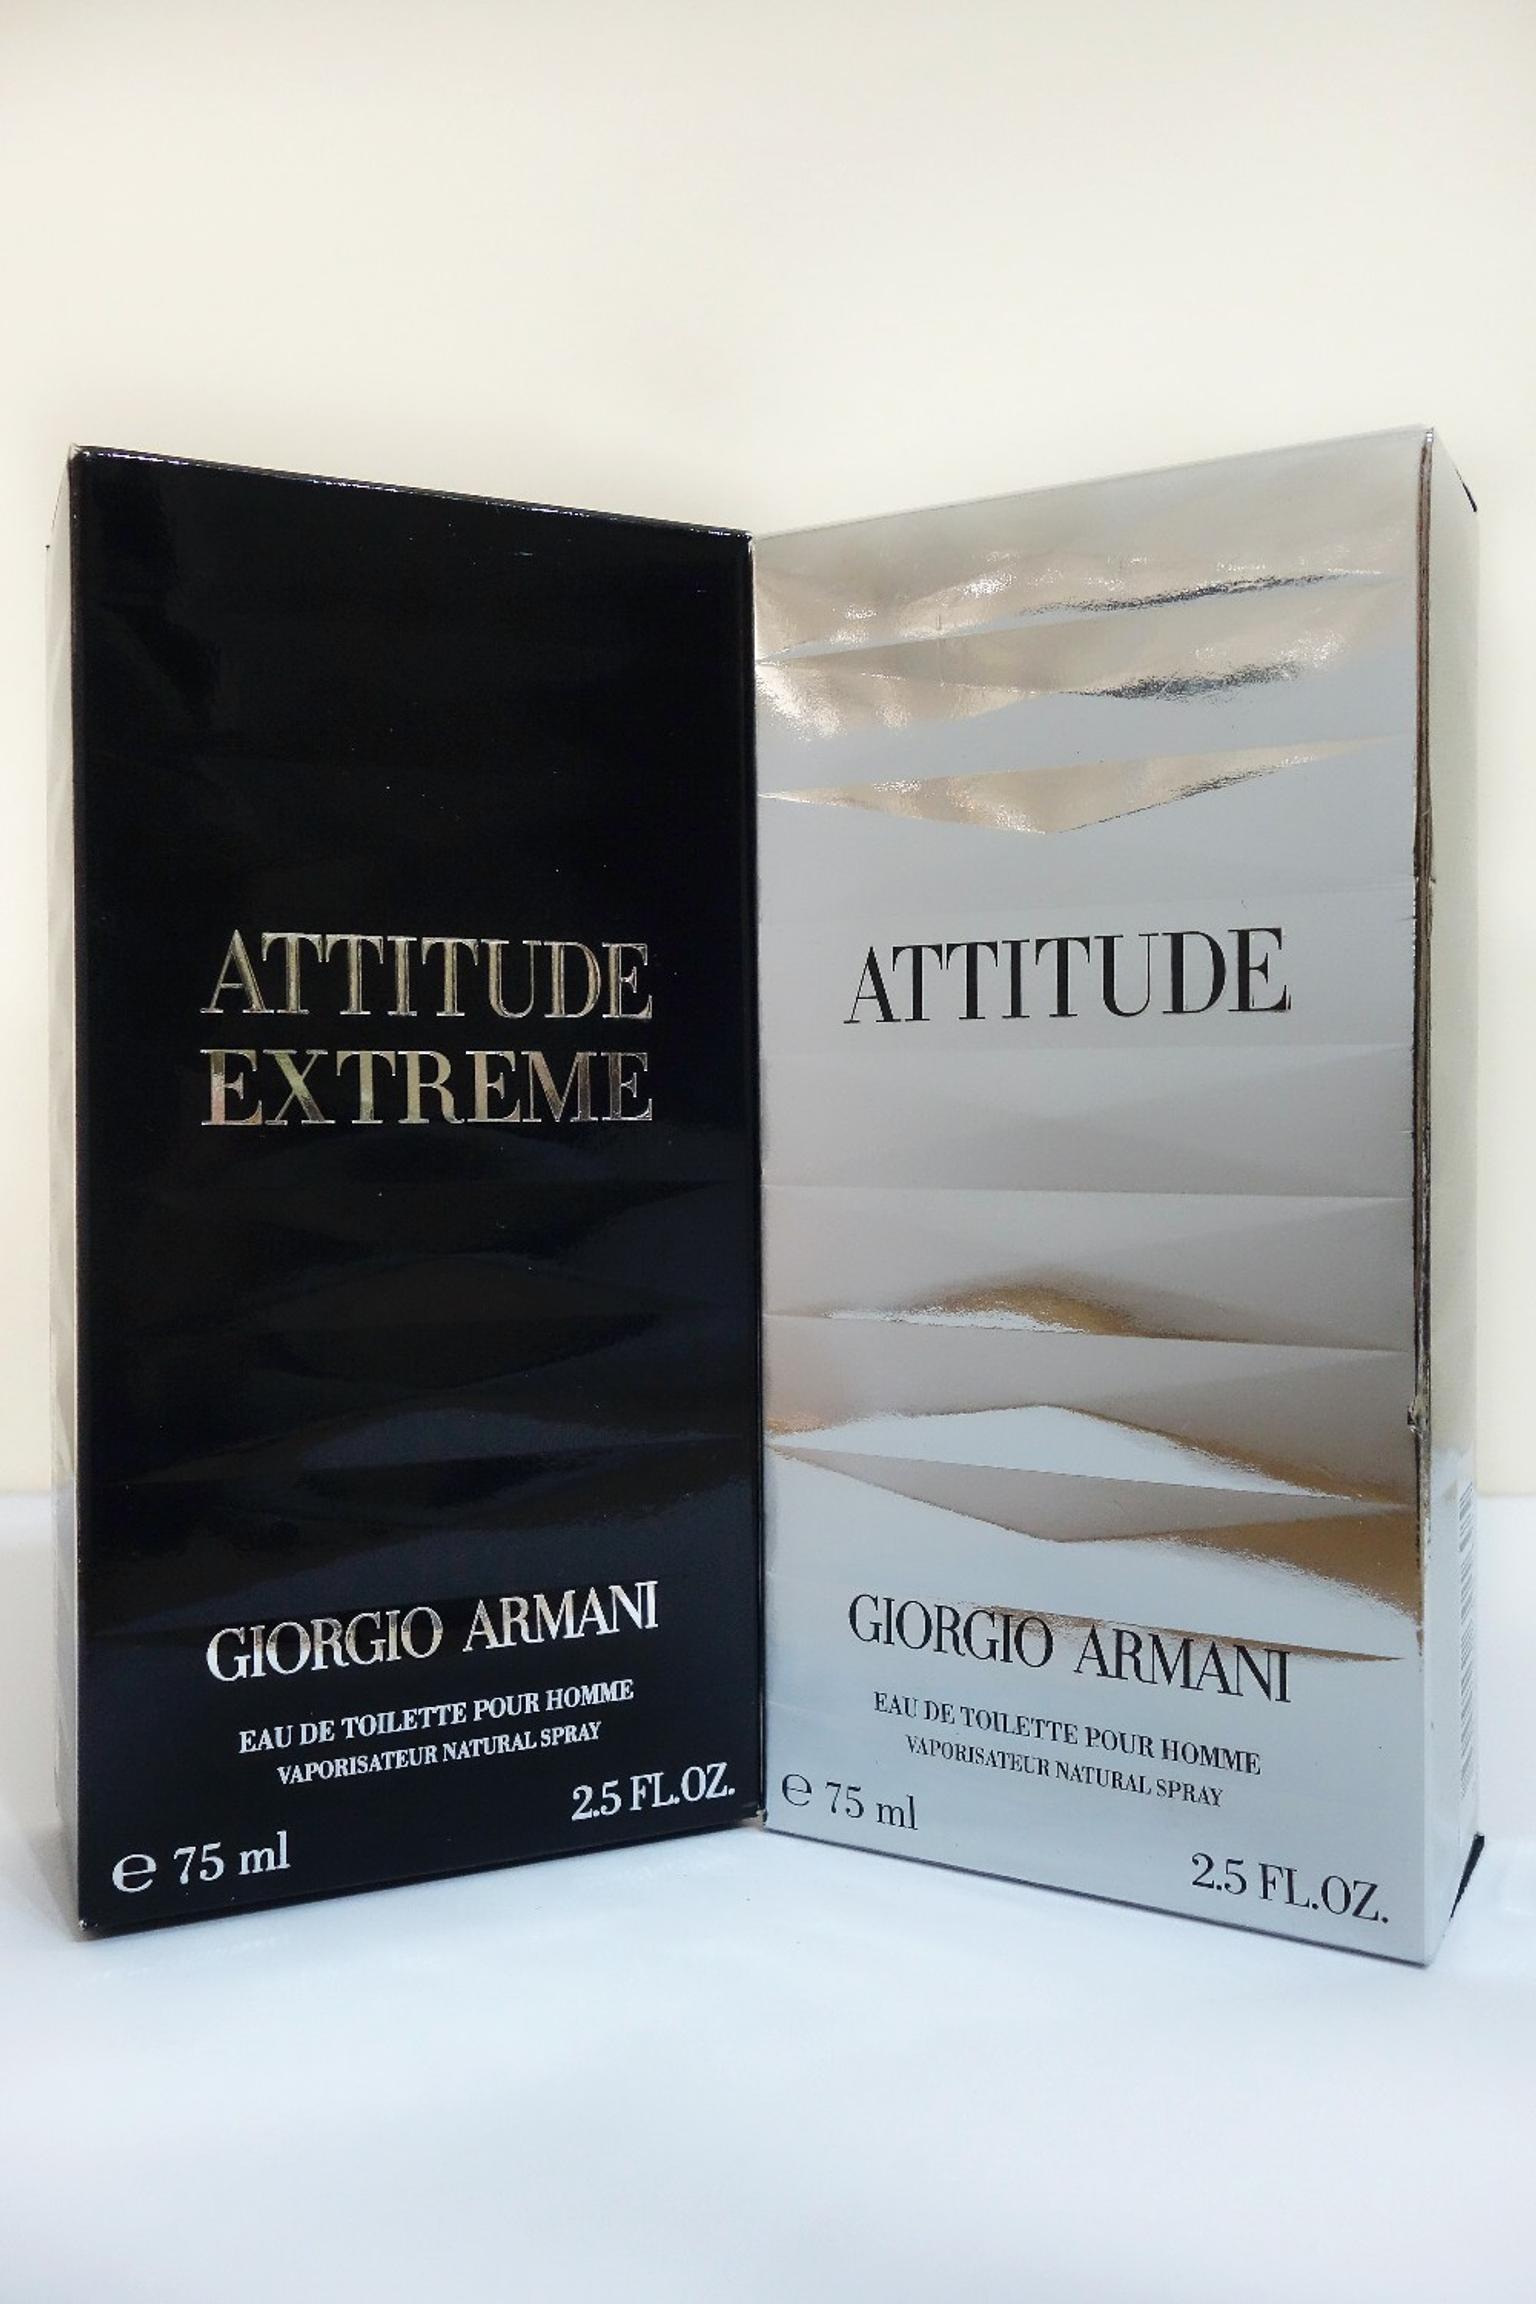 giorgio armani attitude extreme price